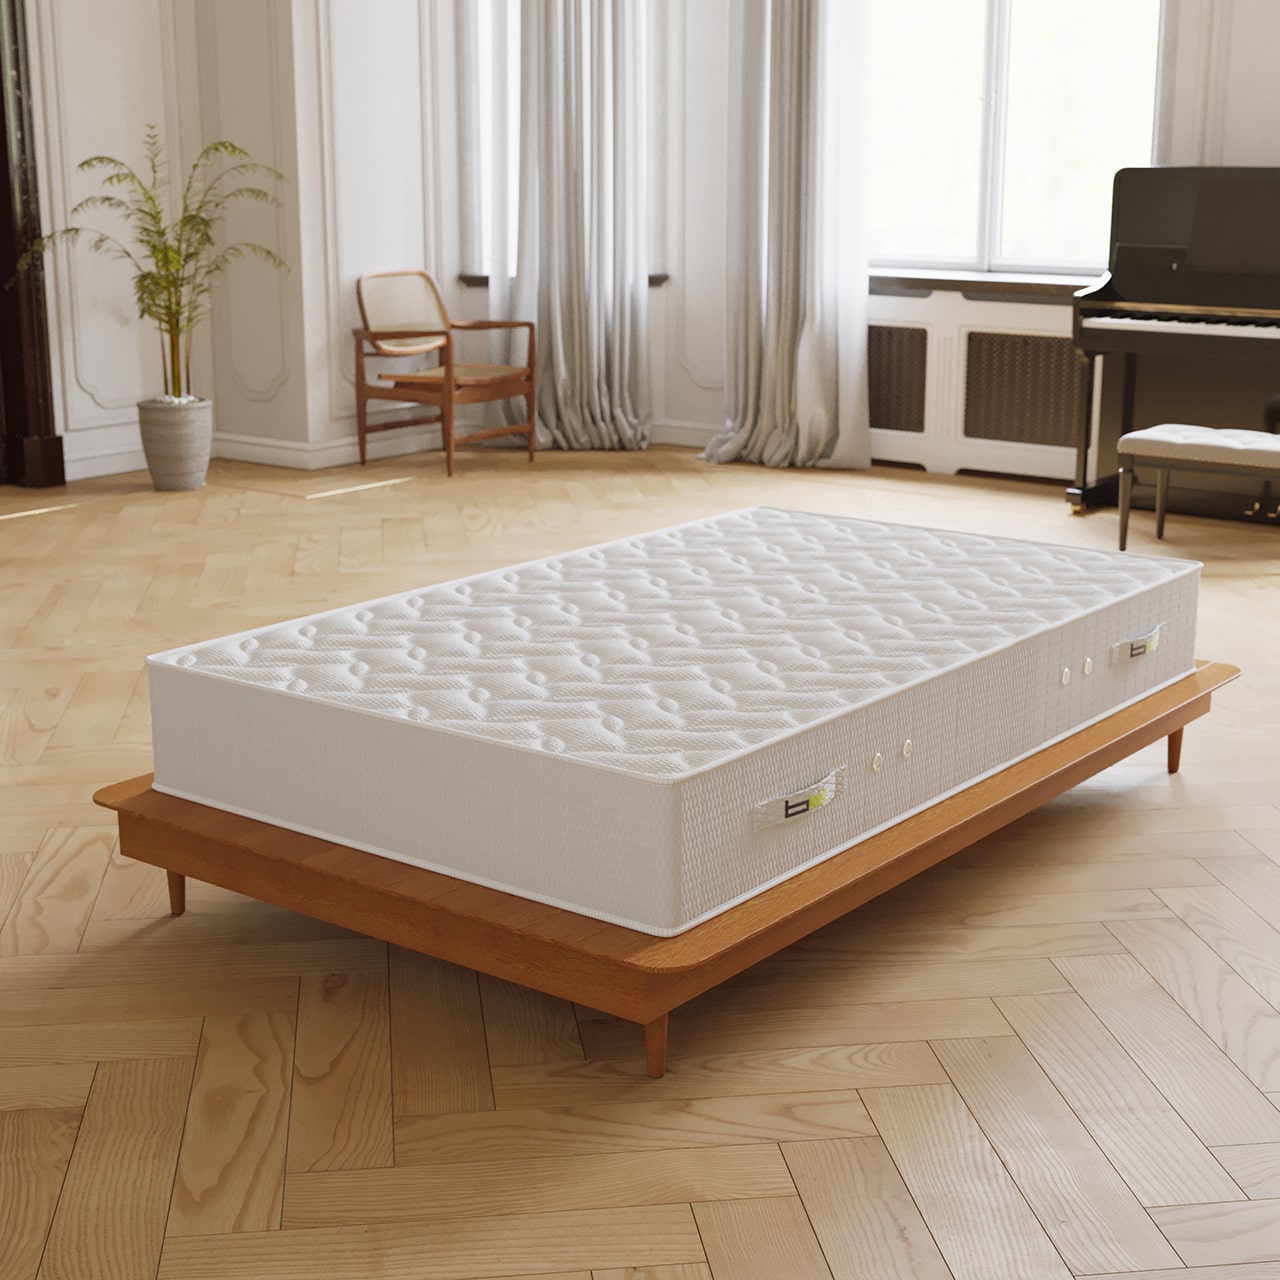 Whisper model balsa medical mattress